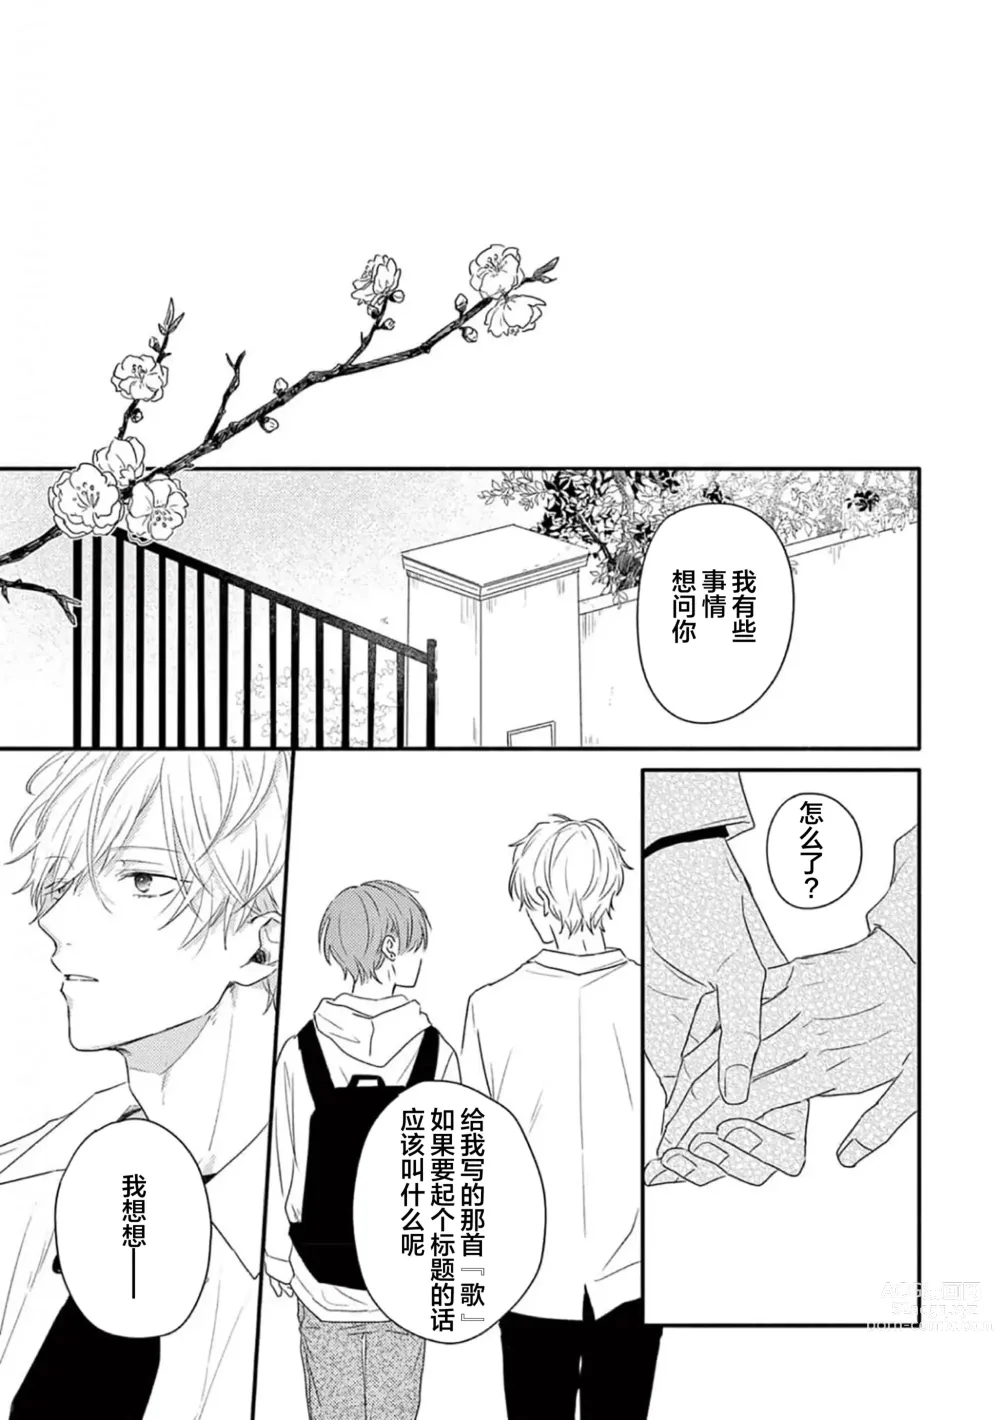 Page 163 of manga 直到这曲恋歌结束为止